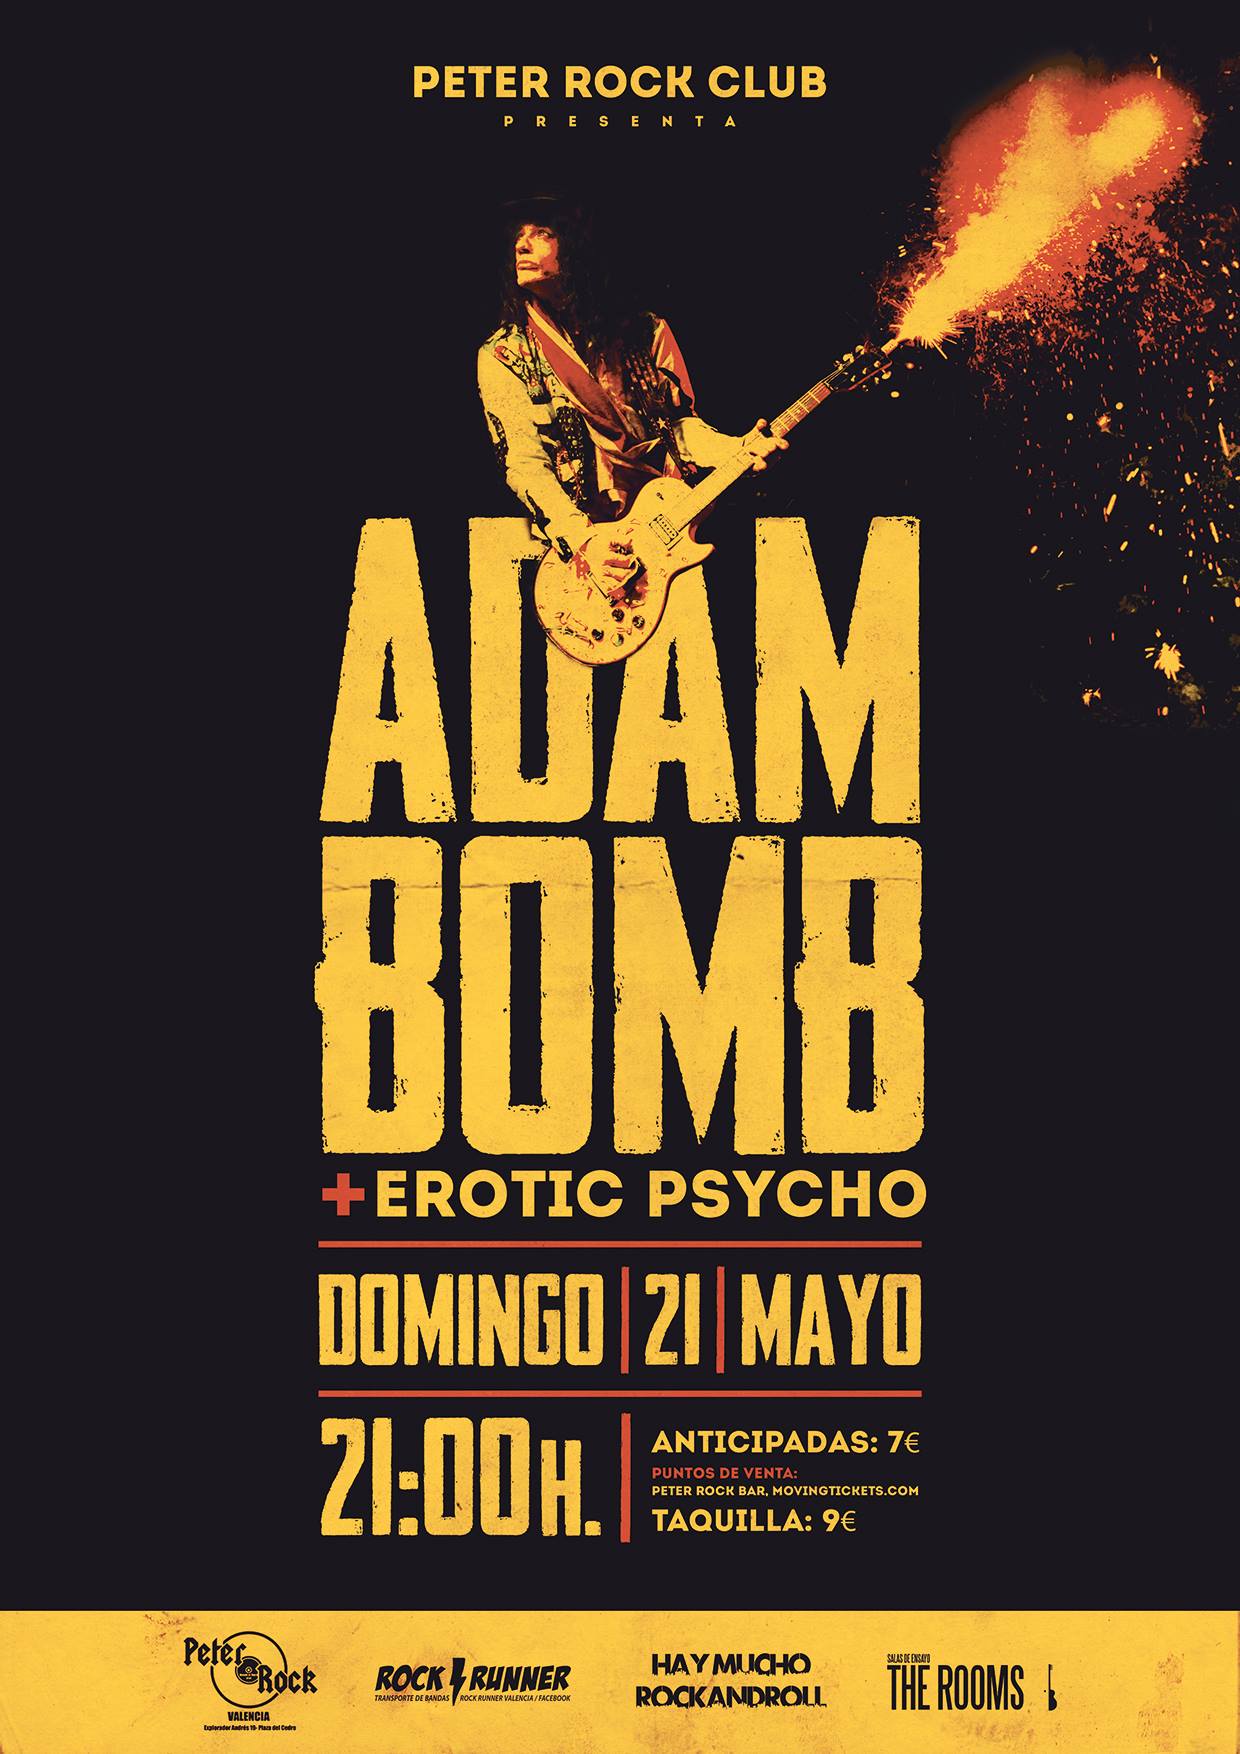 peter rock club_adam bomb